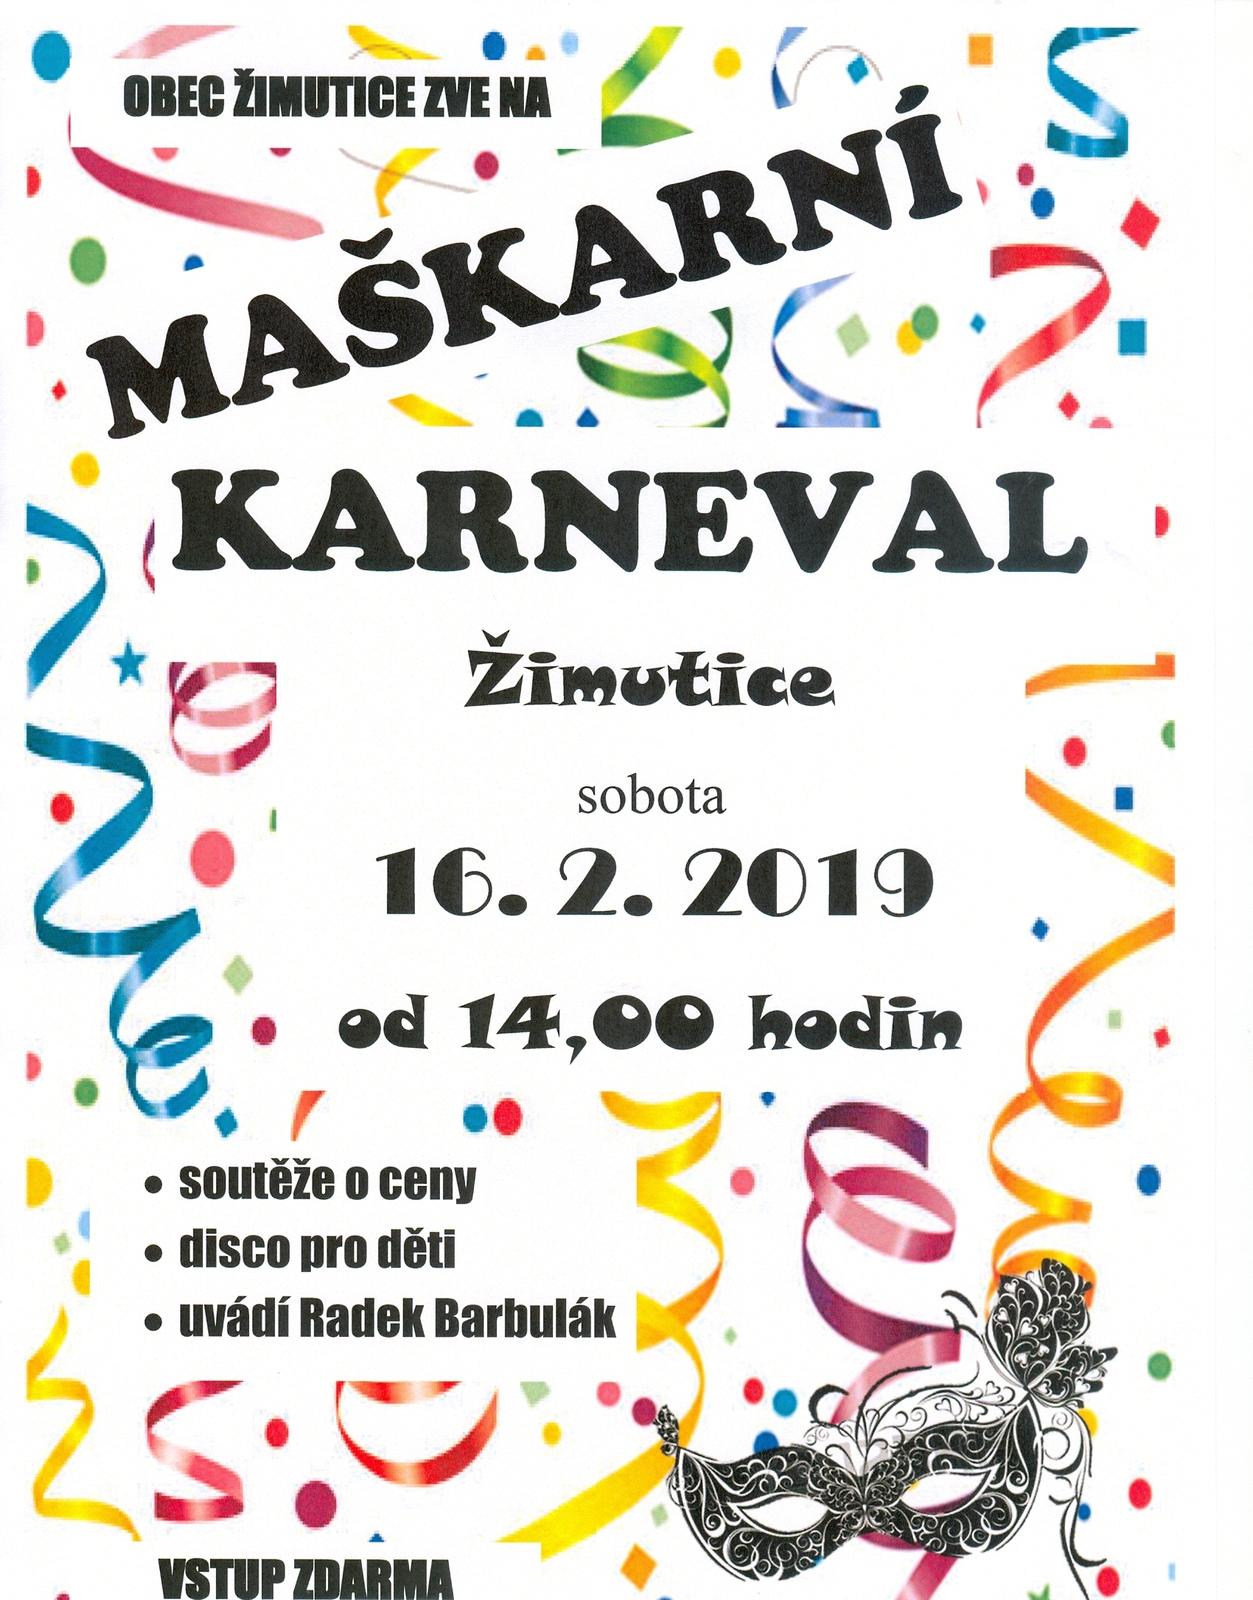 Maškarní karneval Žimutice 2019.jpg